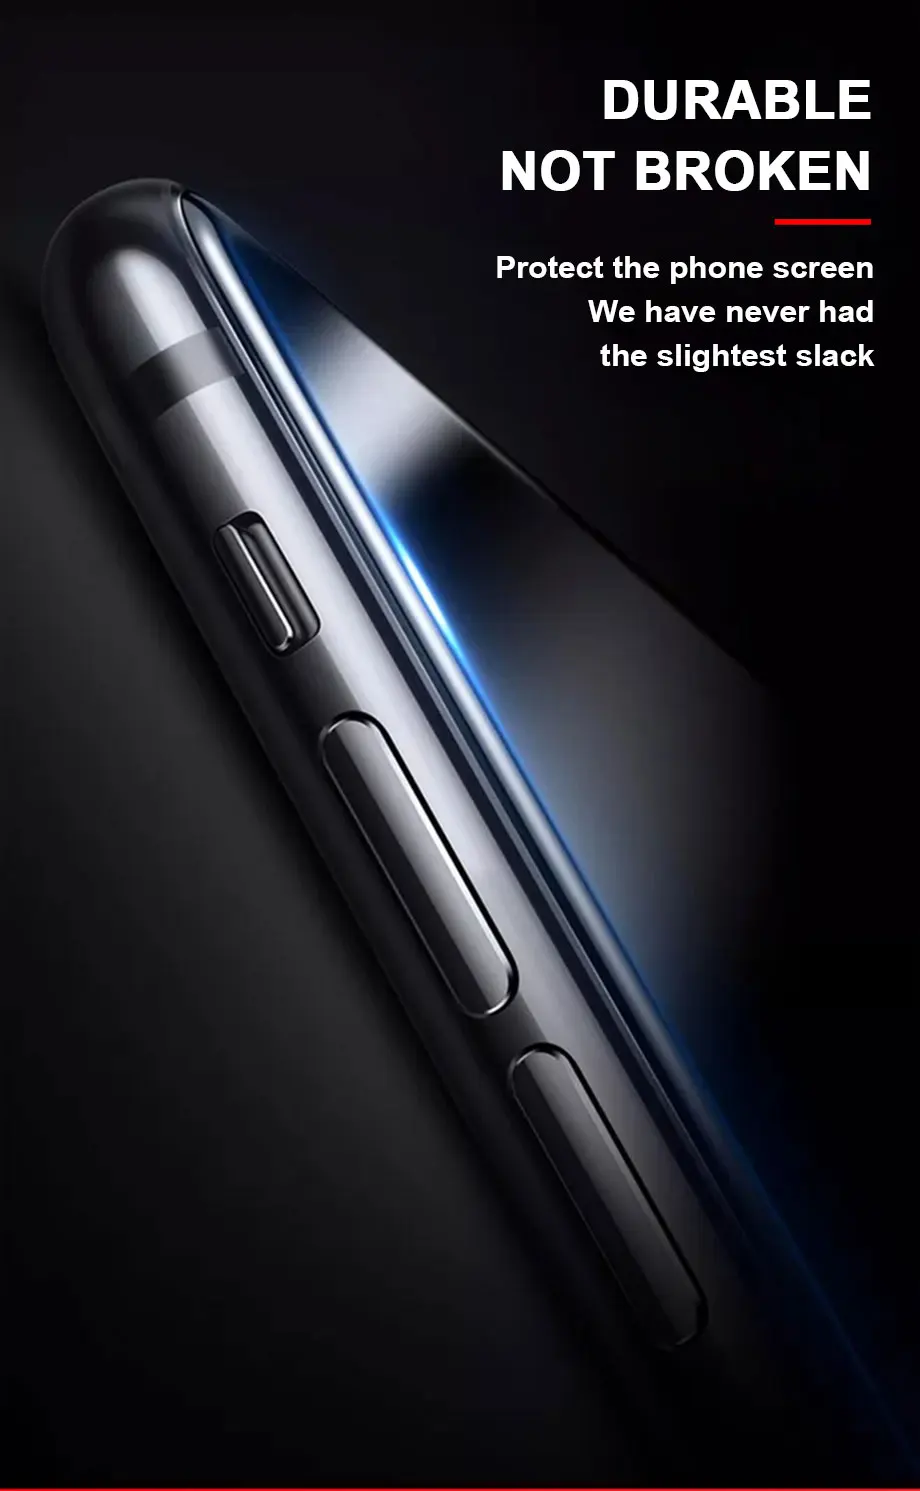 AAA+ Полное покрытие изогнутое Защитное стекло для iPhone 7 8 6 6s Plus защита экрана iPhone 11 Pro X Xr Xs Max закаленное стекло